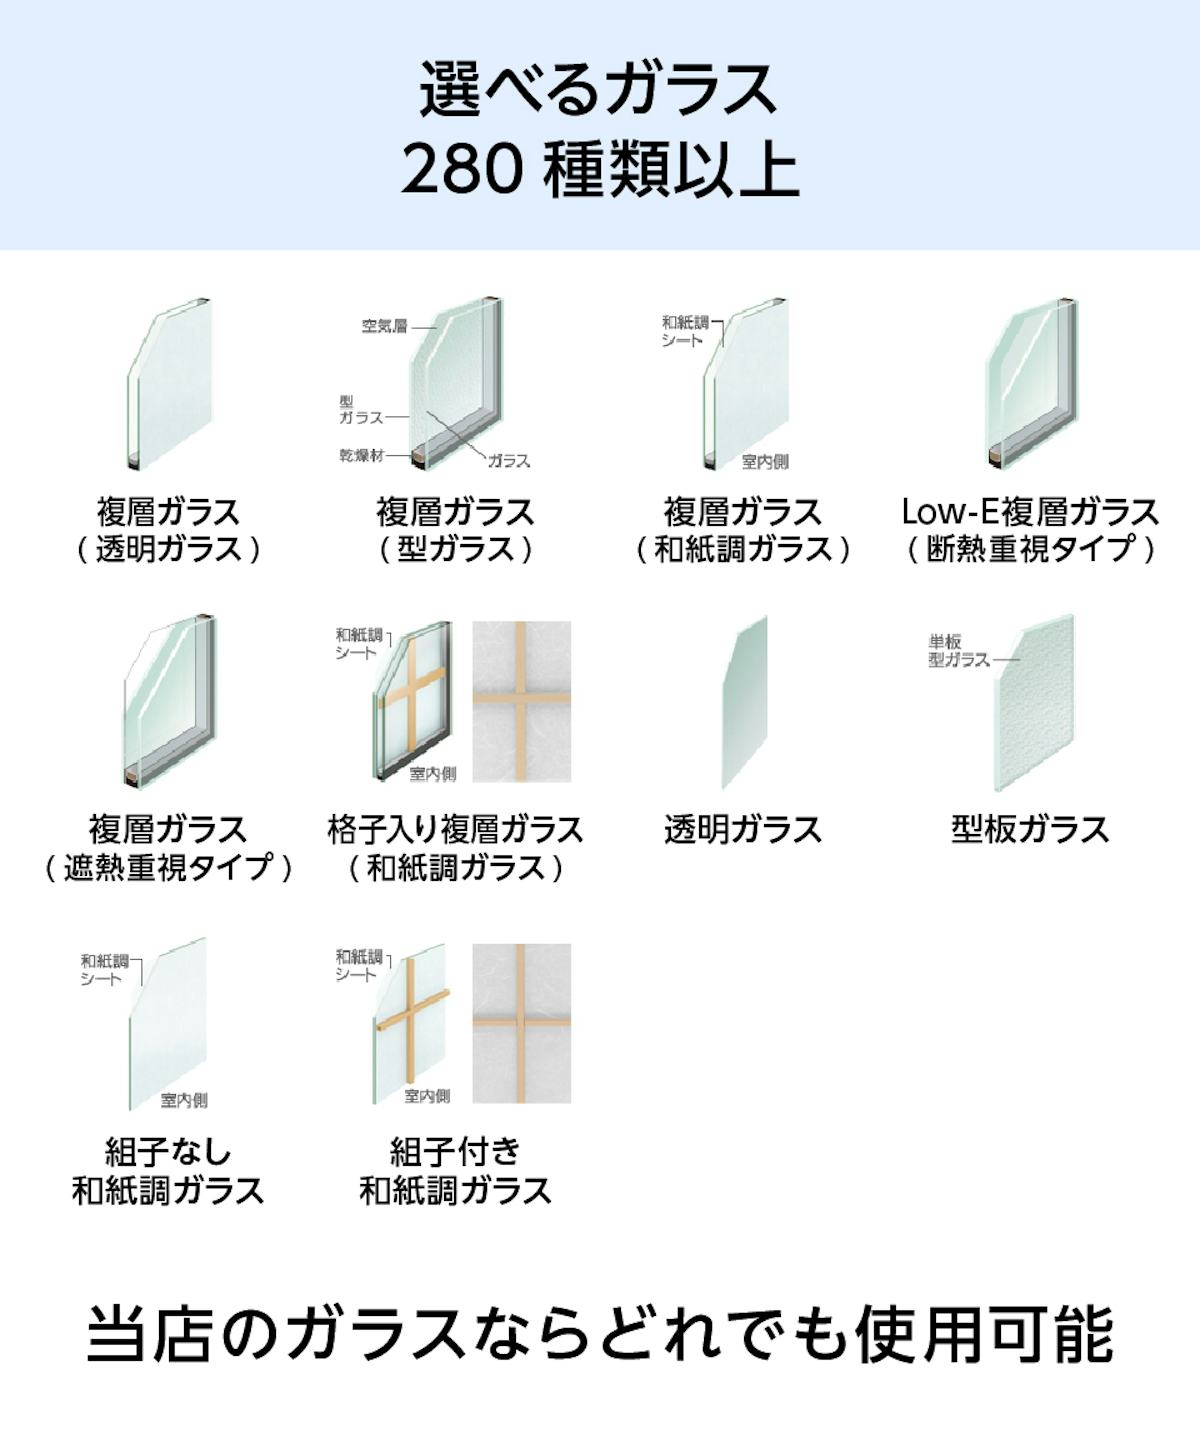 LIXILの内窓「インプラス」引き違い窓(2枚建て) - 280種類以上のガラスから製作